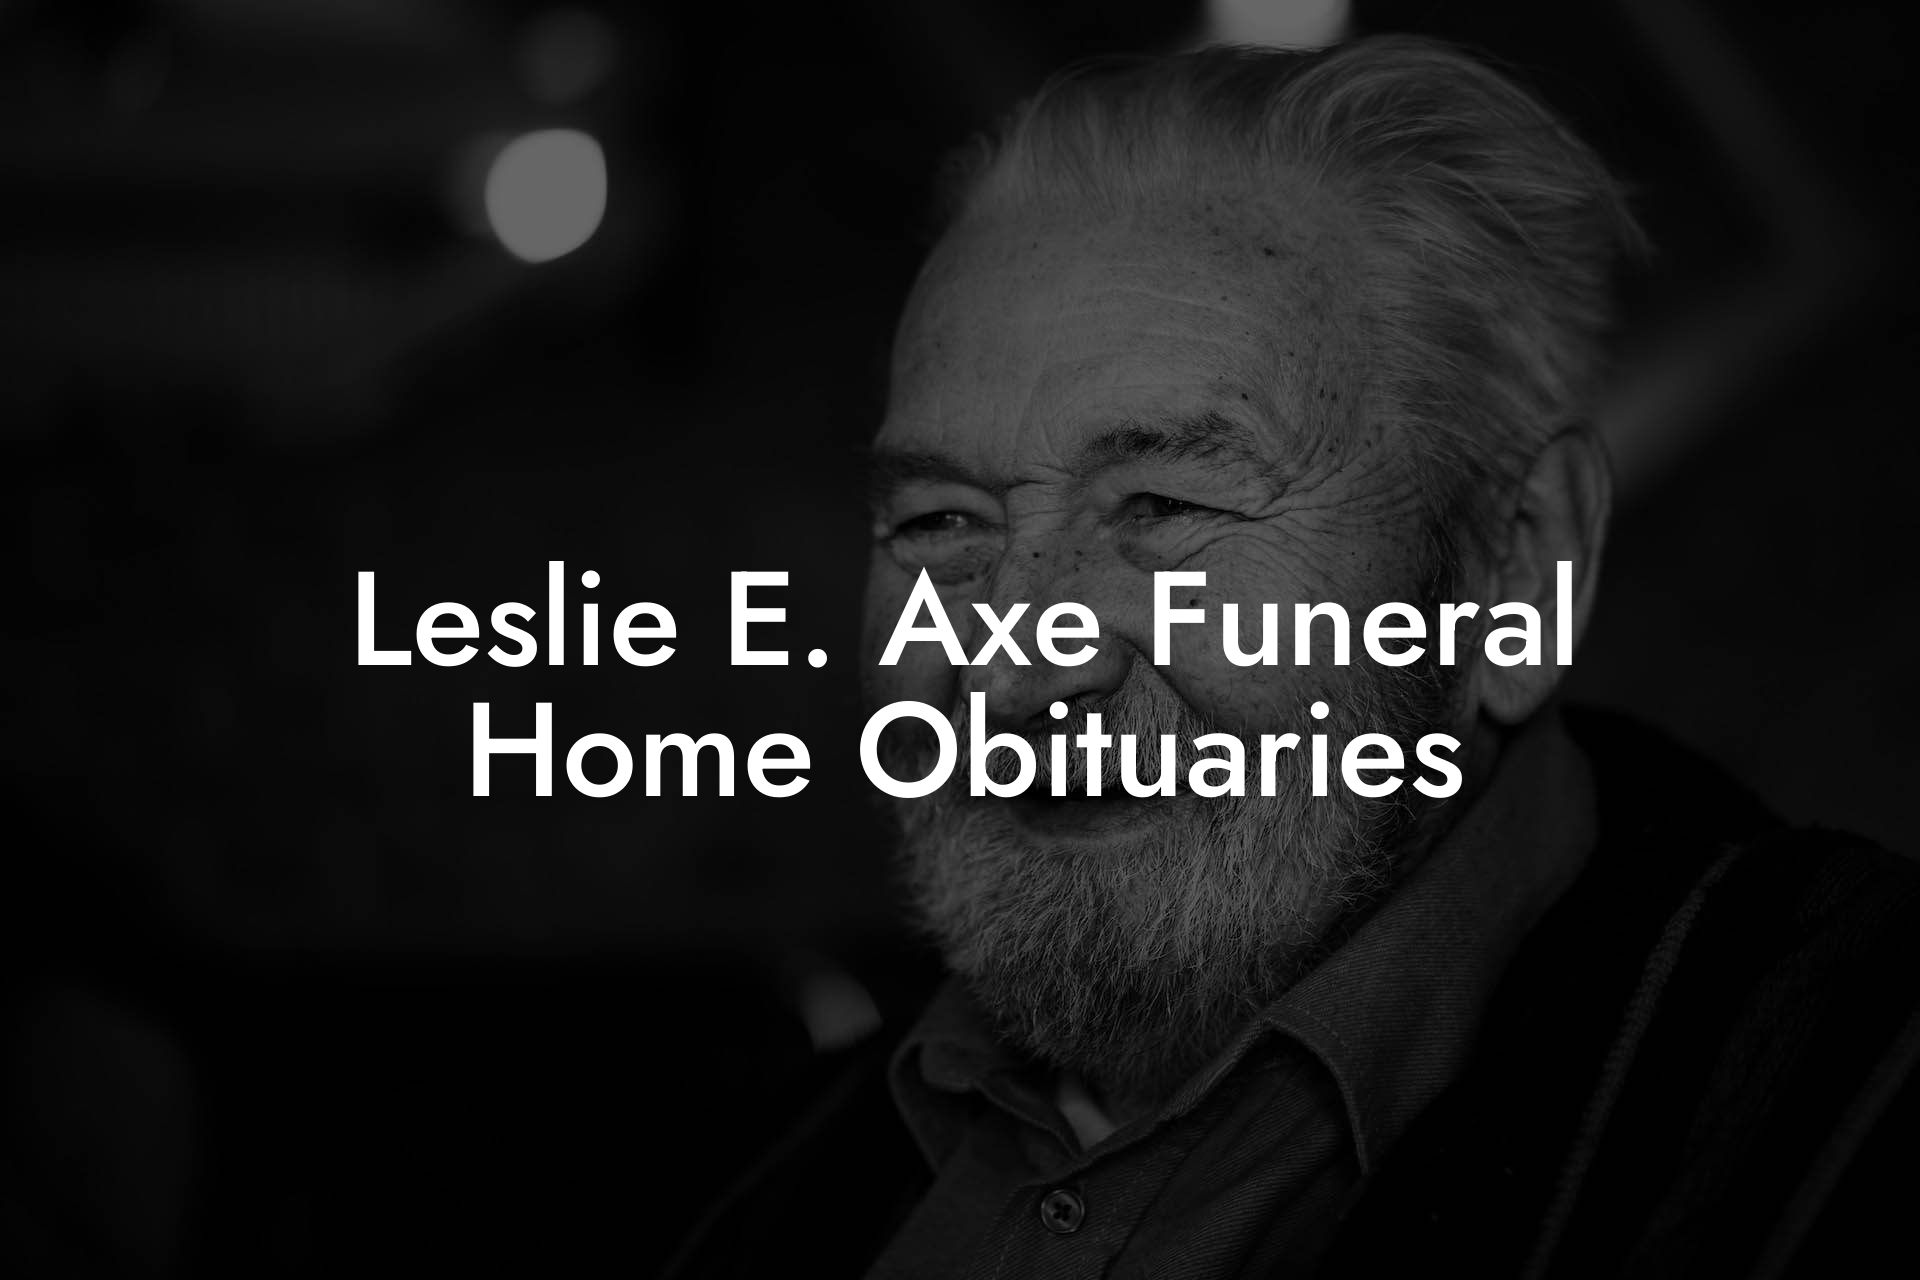 Leslie E. Axe Funeral Home Obituaries